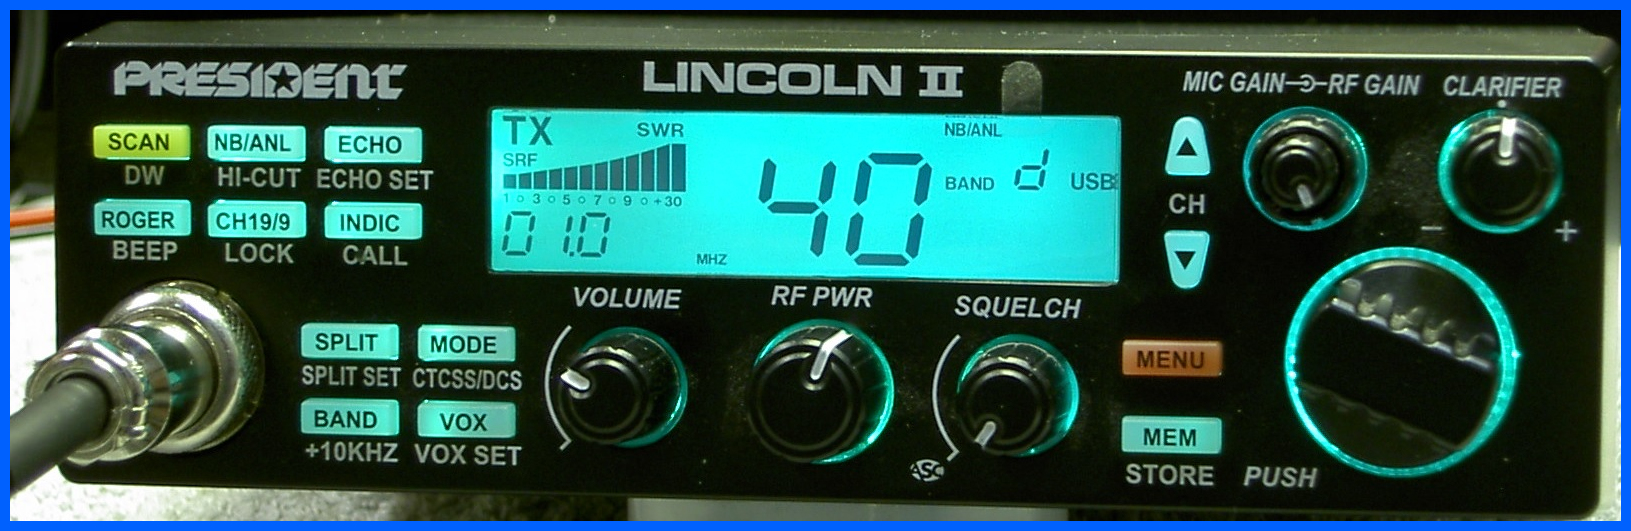 President Lincoln II CB Radio